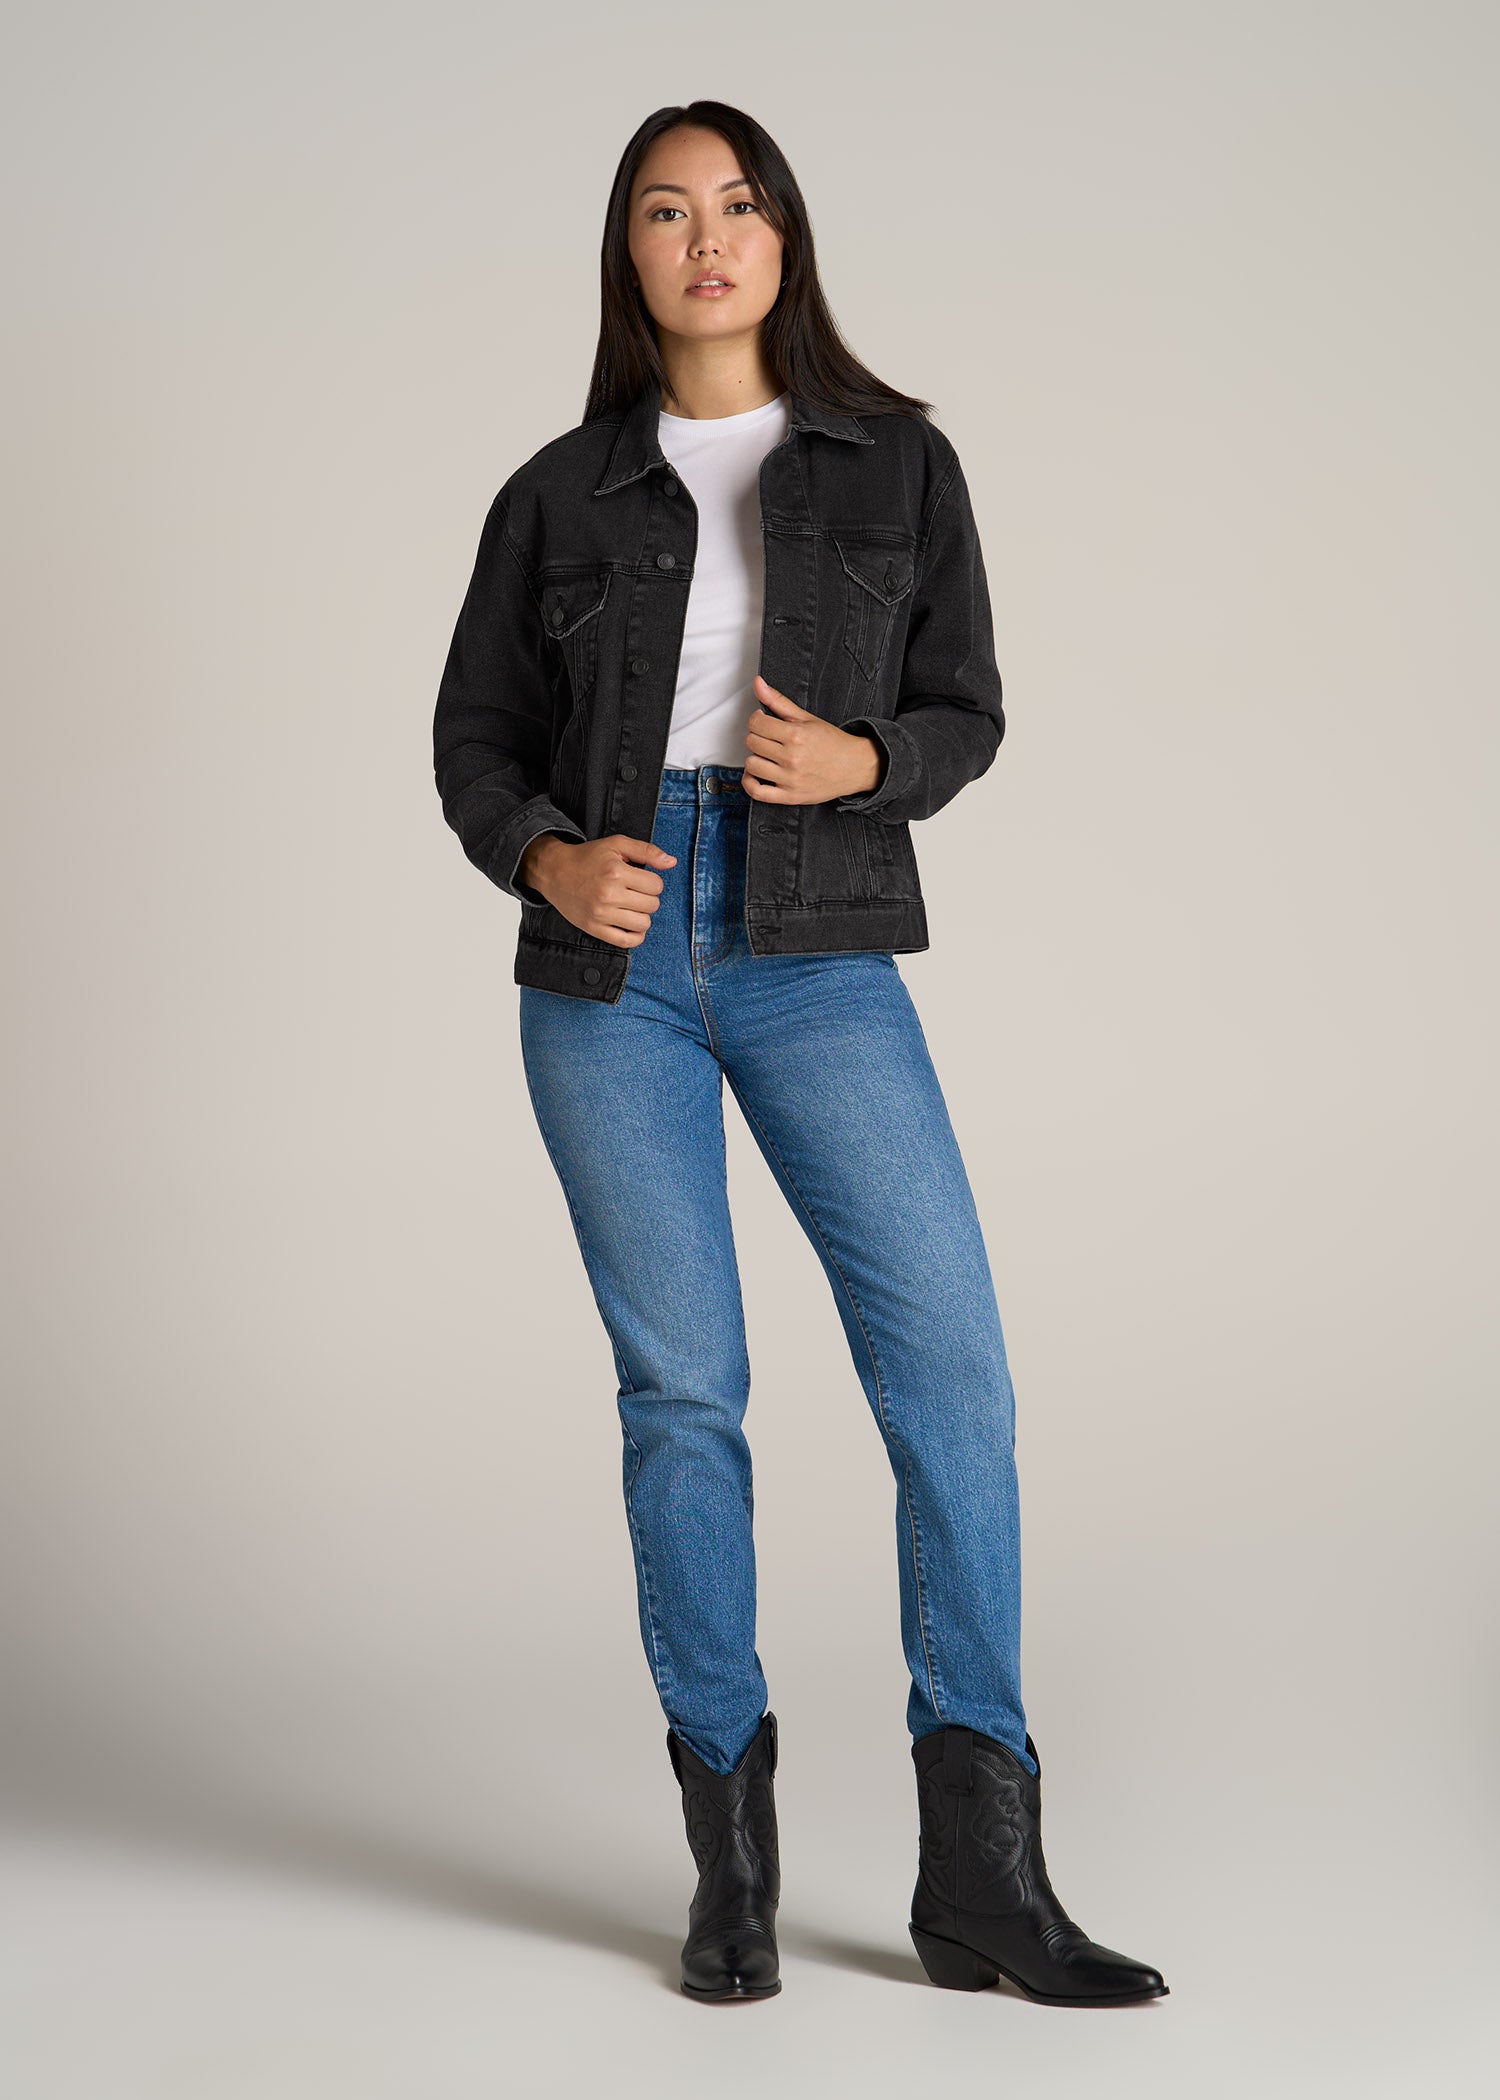 Tall Women's Jackets | Tall Women's Coats | American Tall